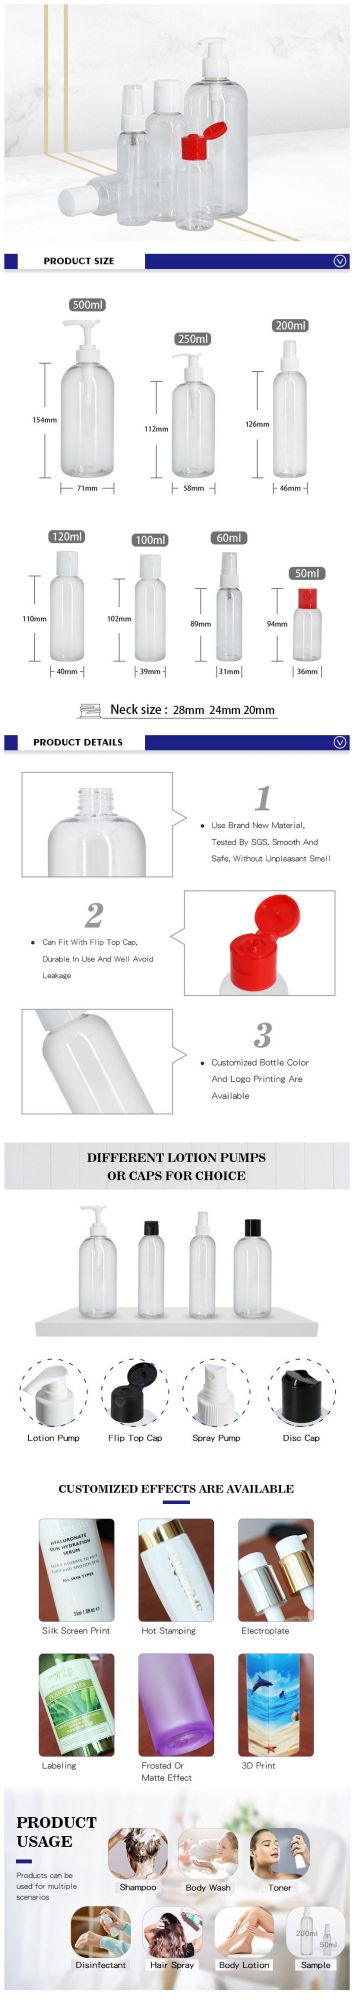 Hot Sale Plastic Hand Sanitizer Bottles Shampoo Bottle with Pump 100ml 200ml 500ml